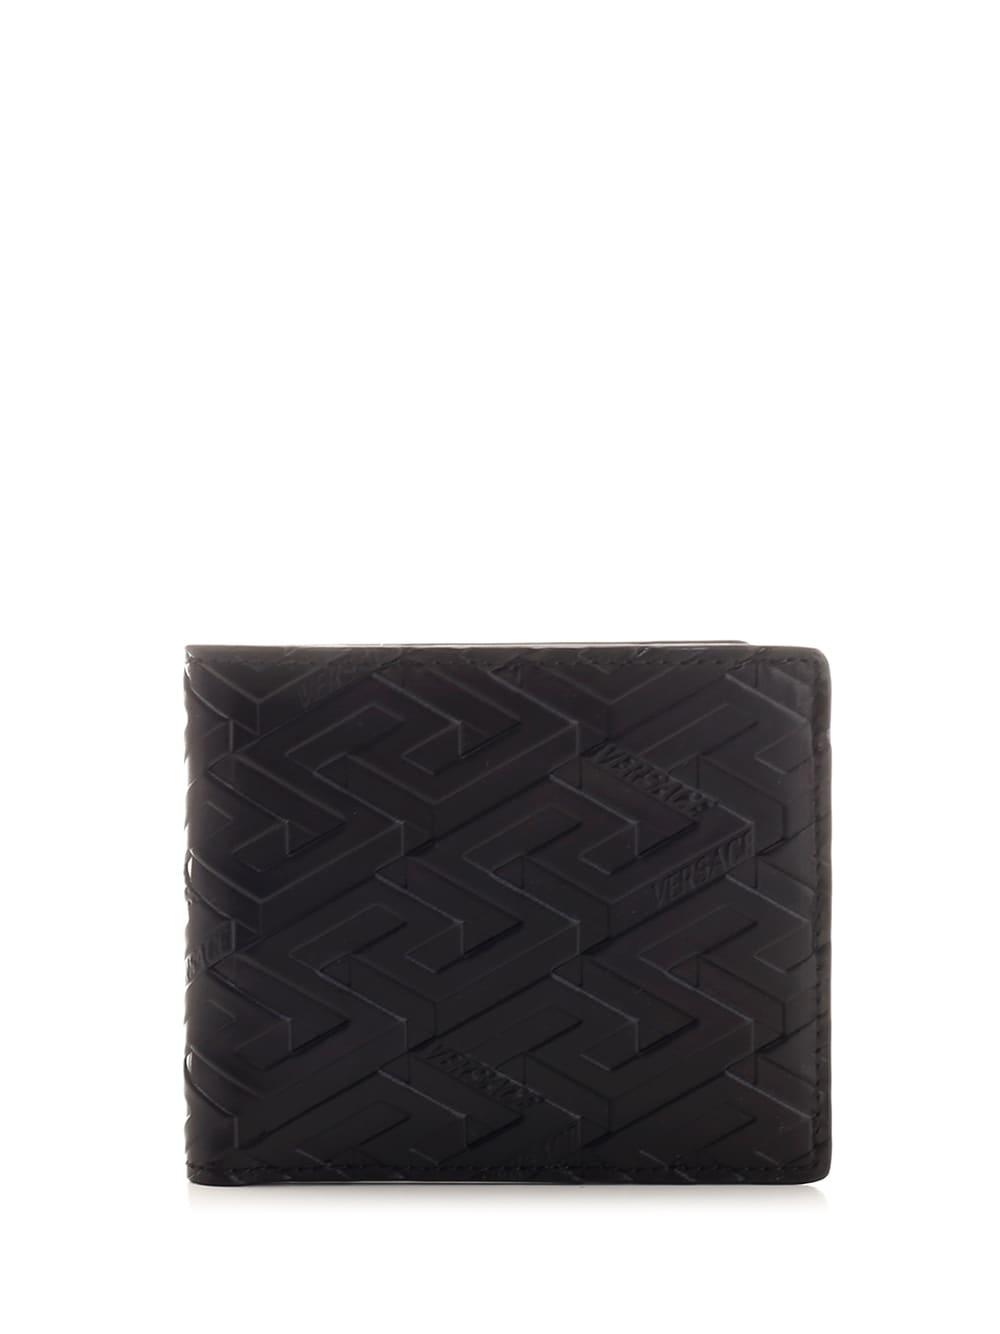 Versace Black La Greca Signature Wallet for Men | Lyst